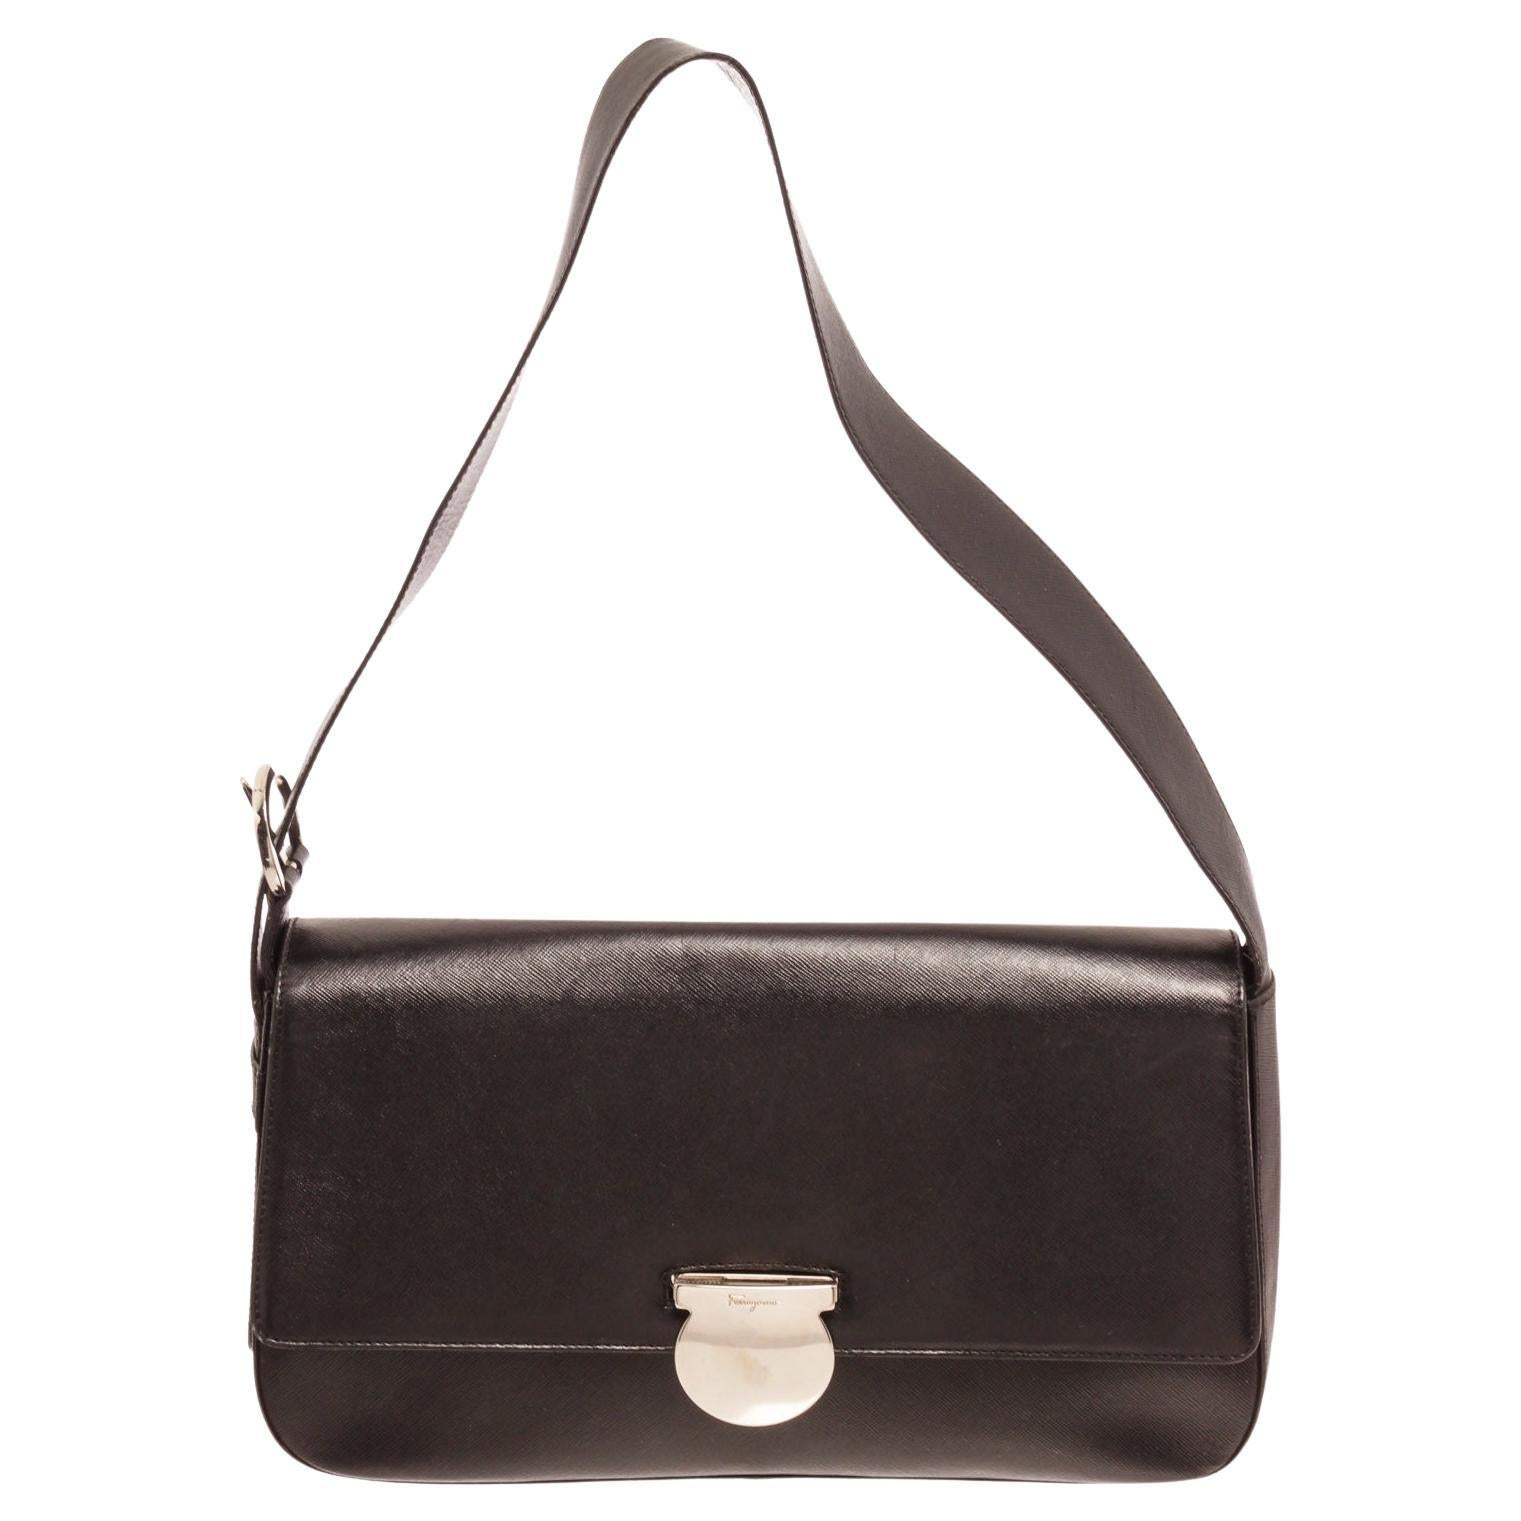 Ferragamo Black Leather Shoulder Bag with silver-tone hardware